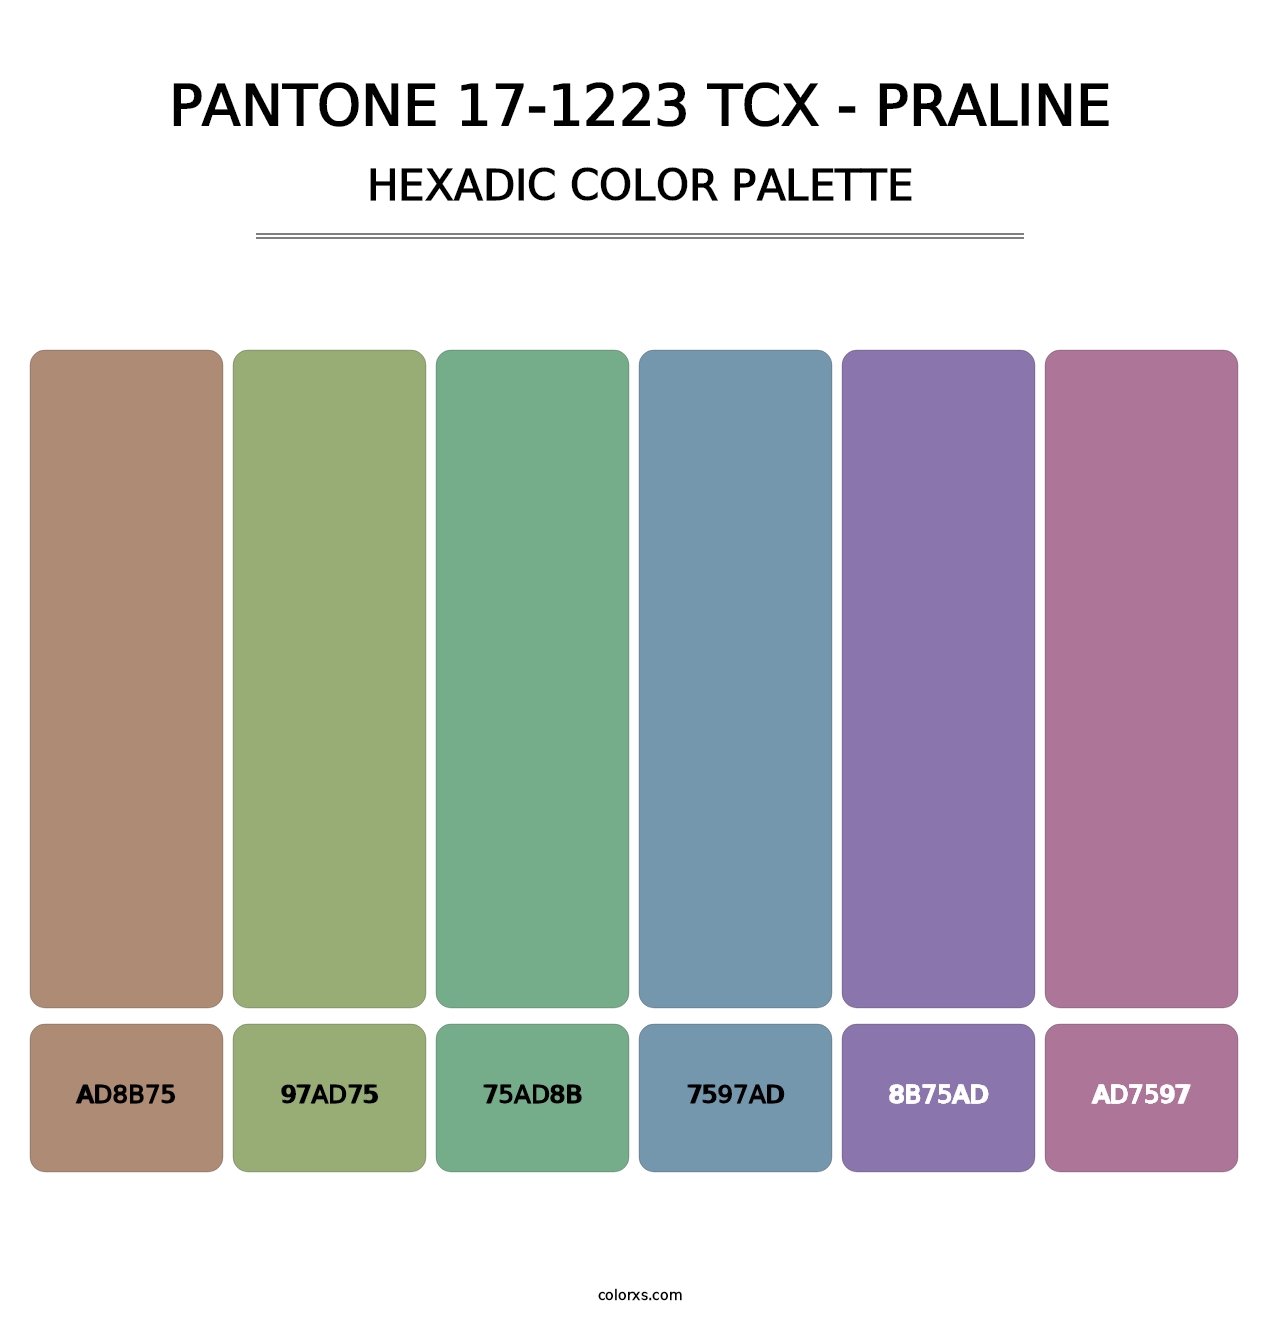 PANTONE 17-1223 TCX - Praline - Hexadic Color Palette